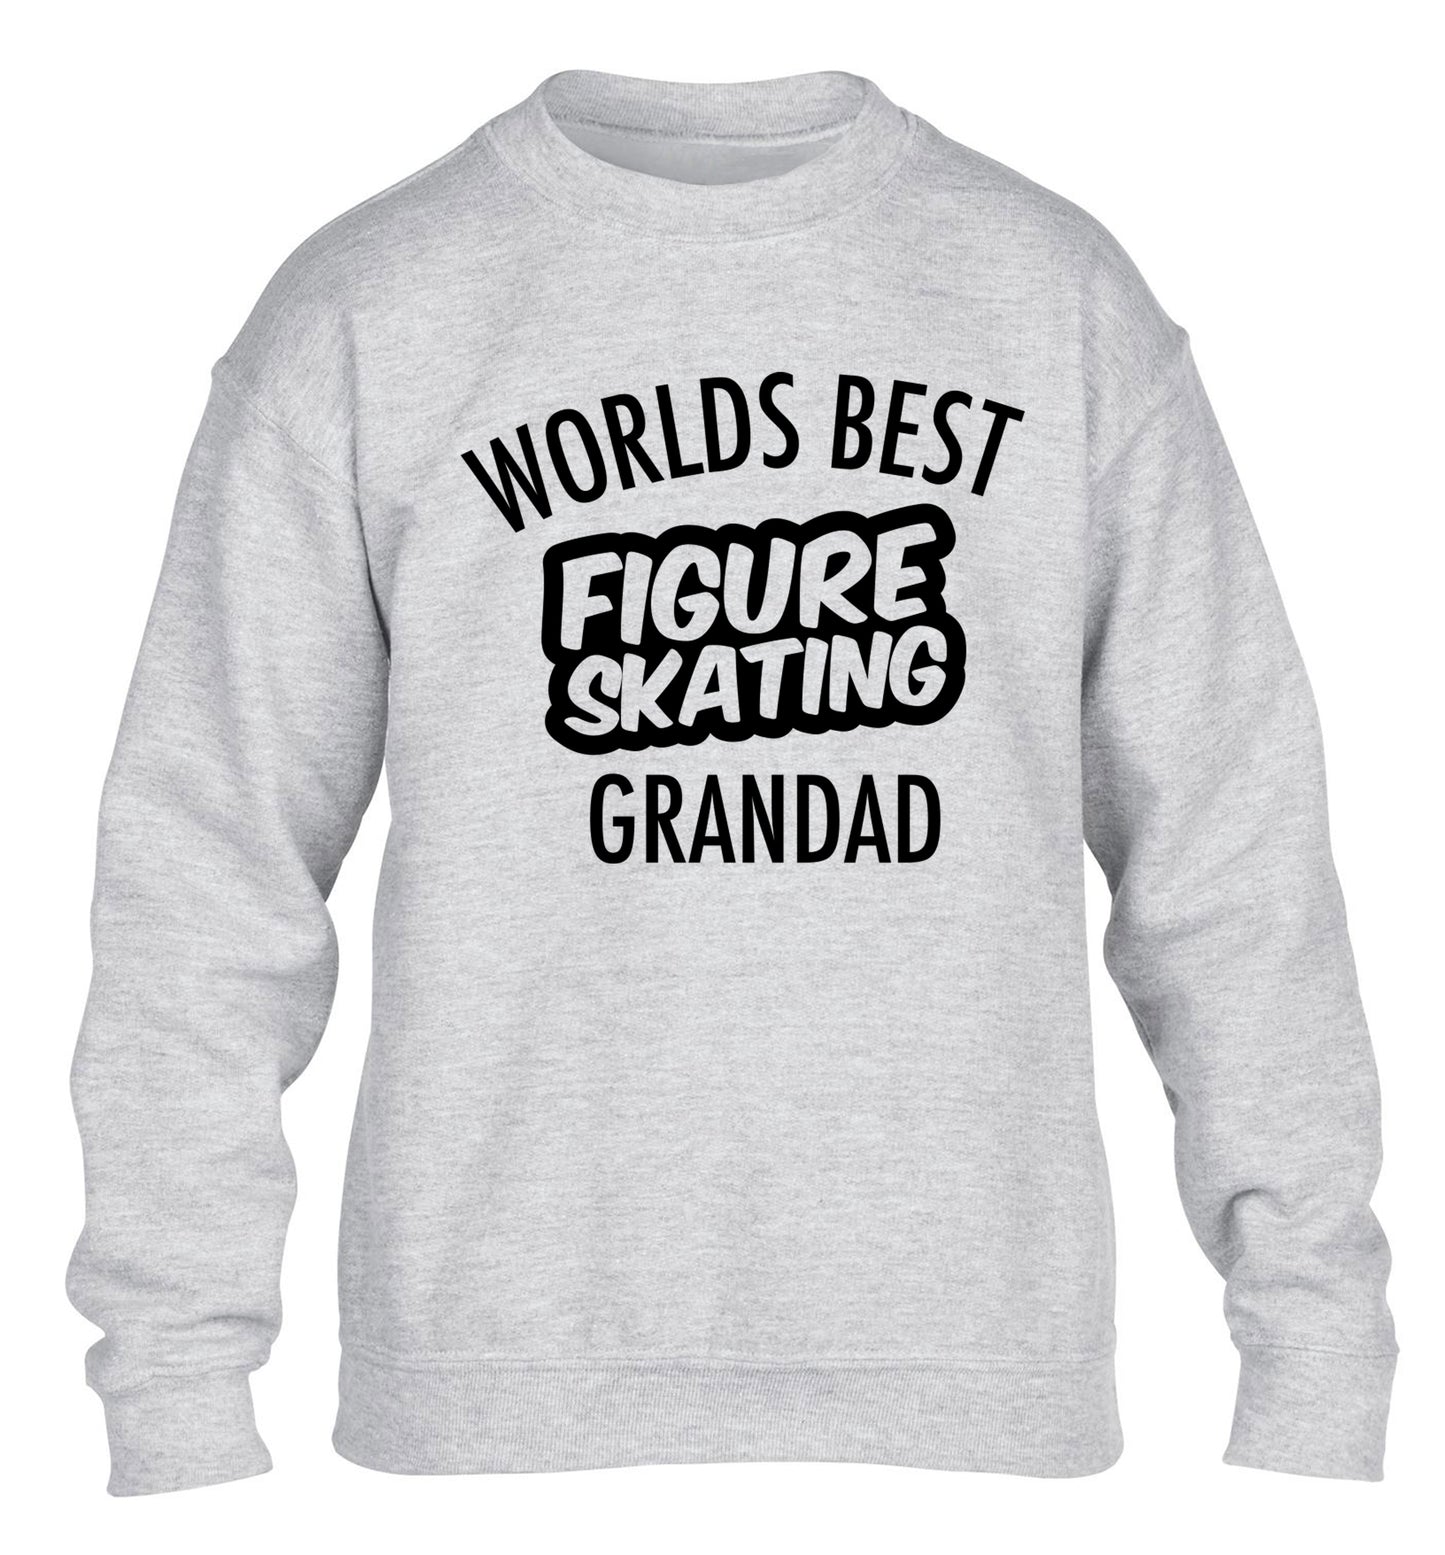 Worlds best figure skating grandad children's grey sweater 12-14 Years